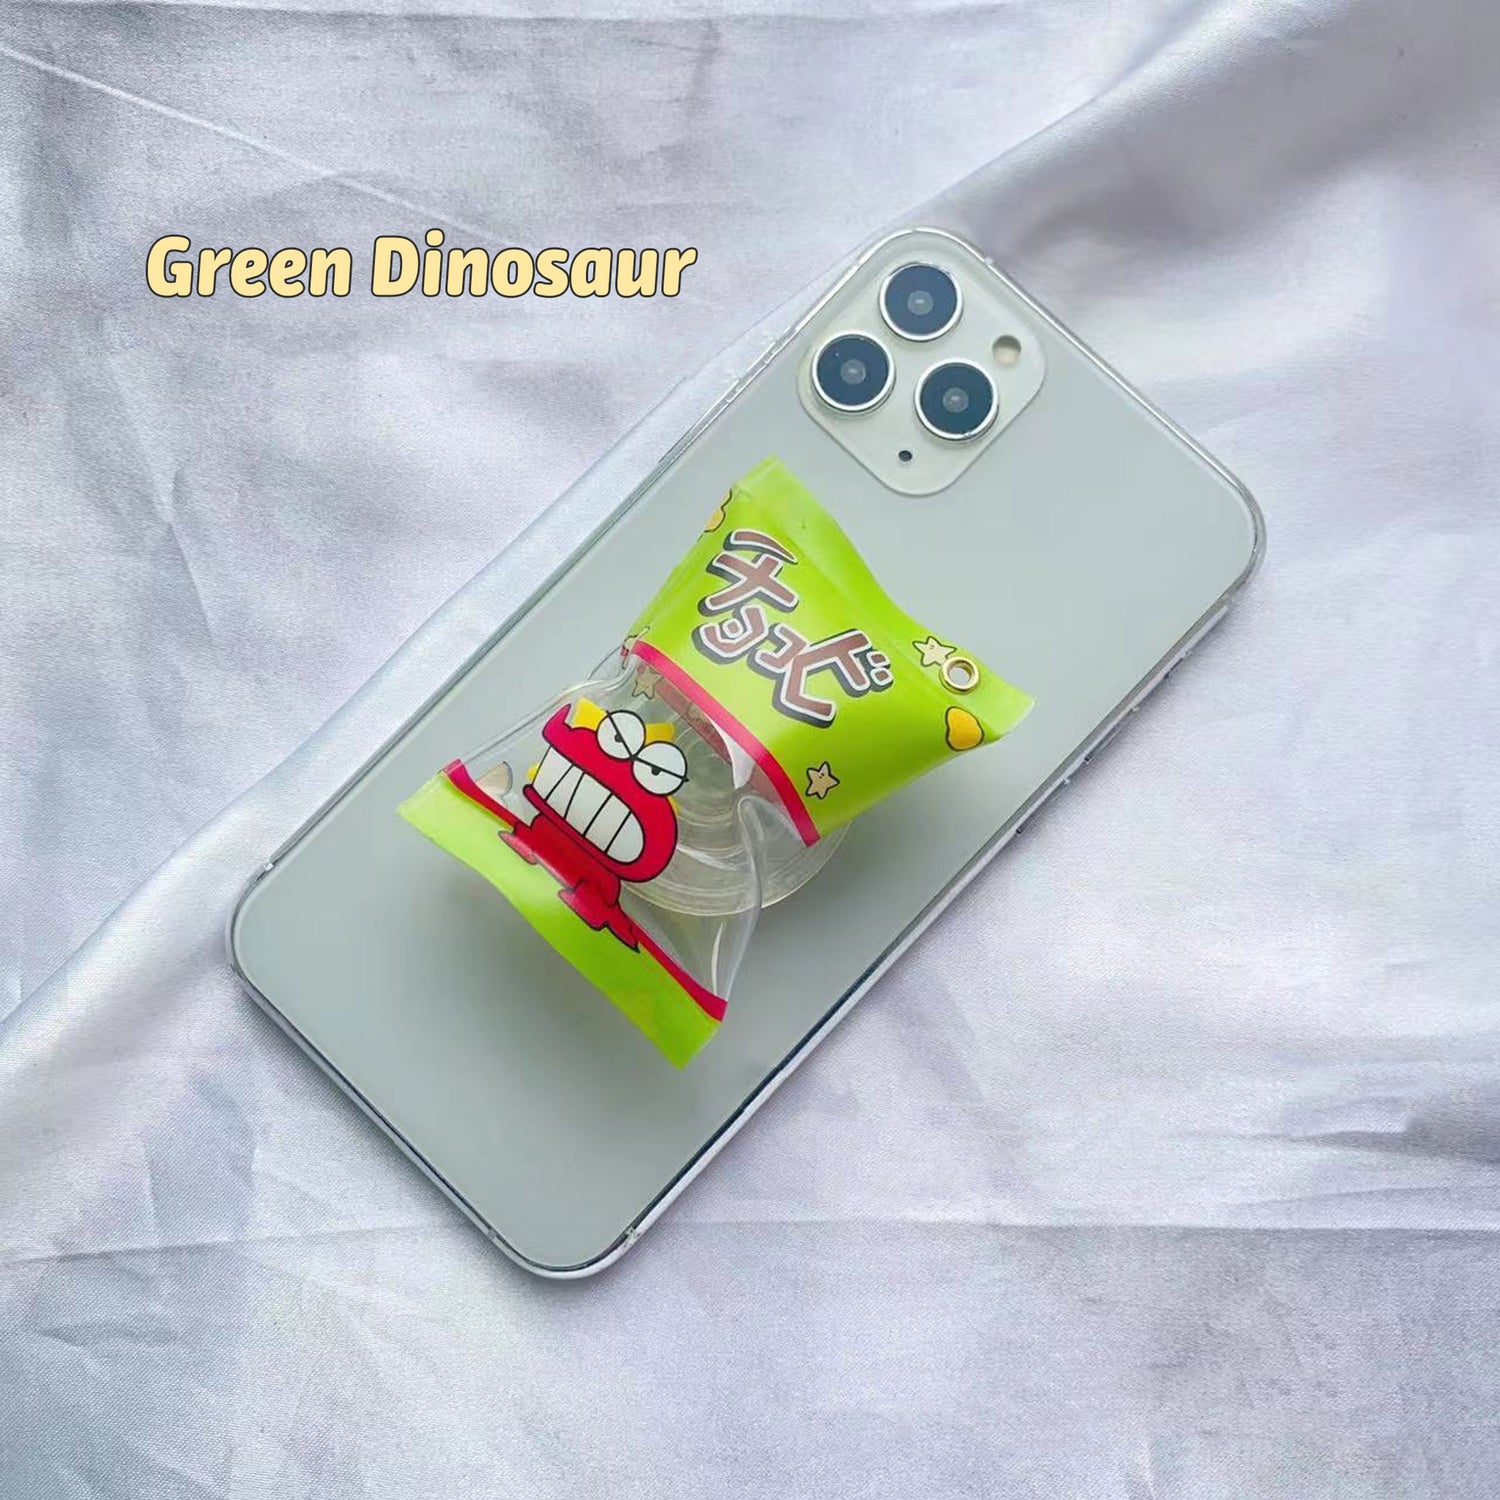 Dinosaur Candy Phone Grip Stand Holder